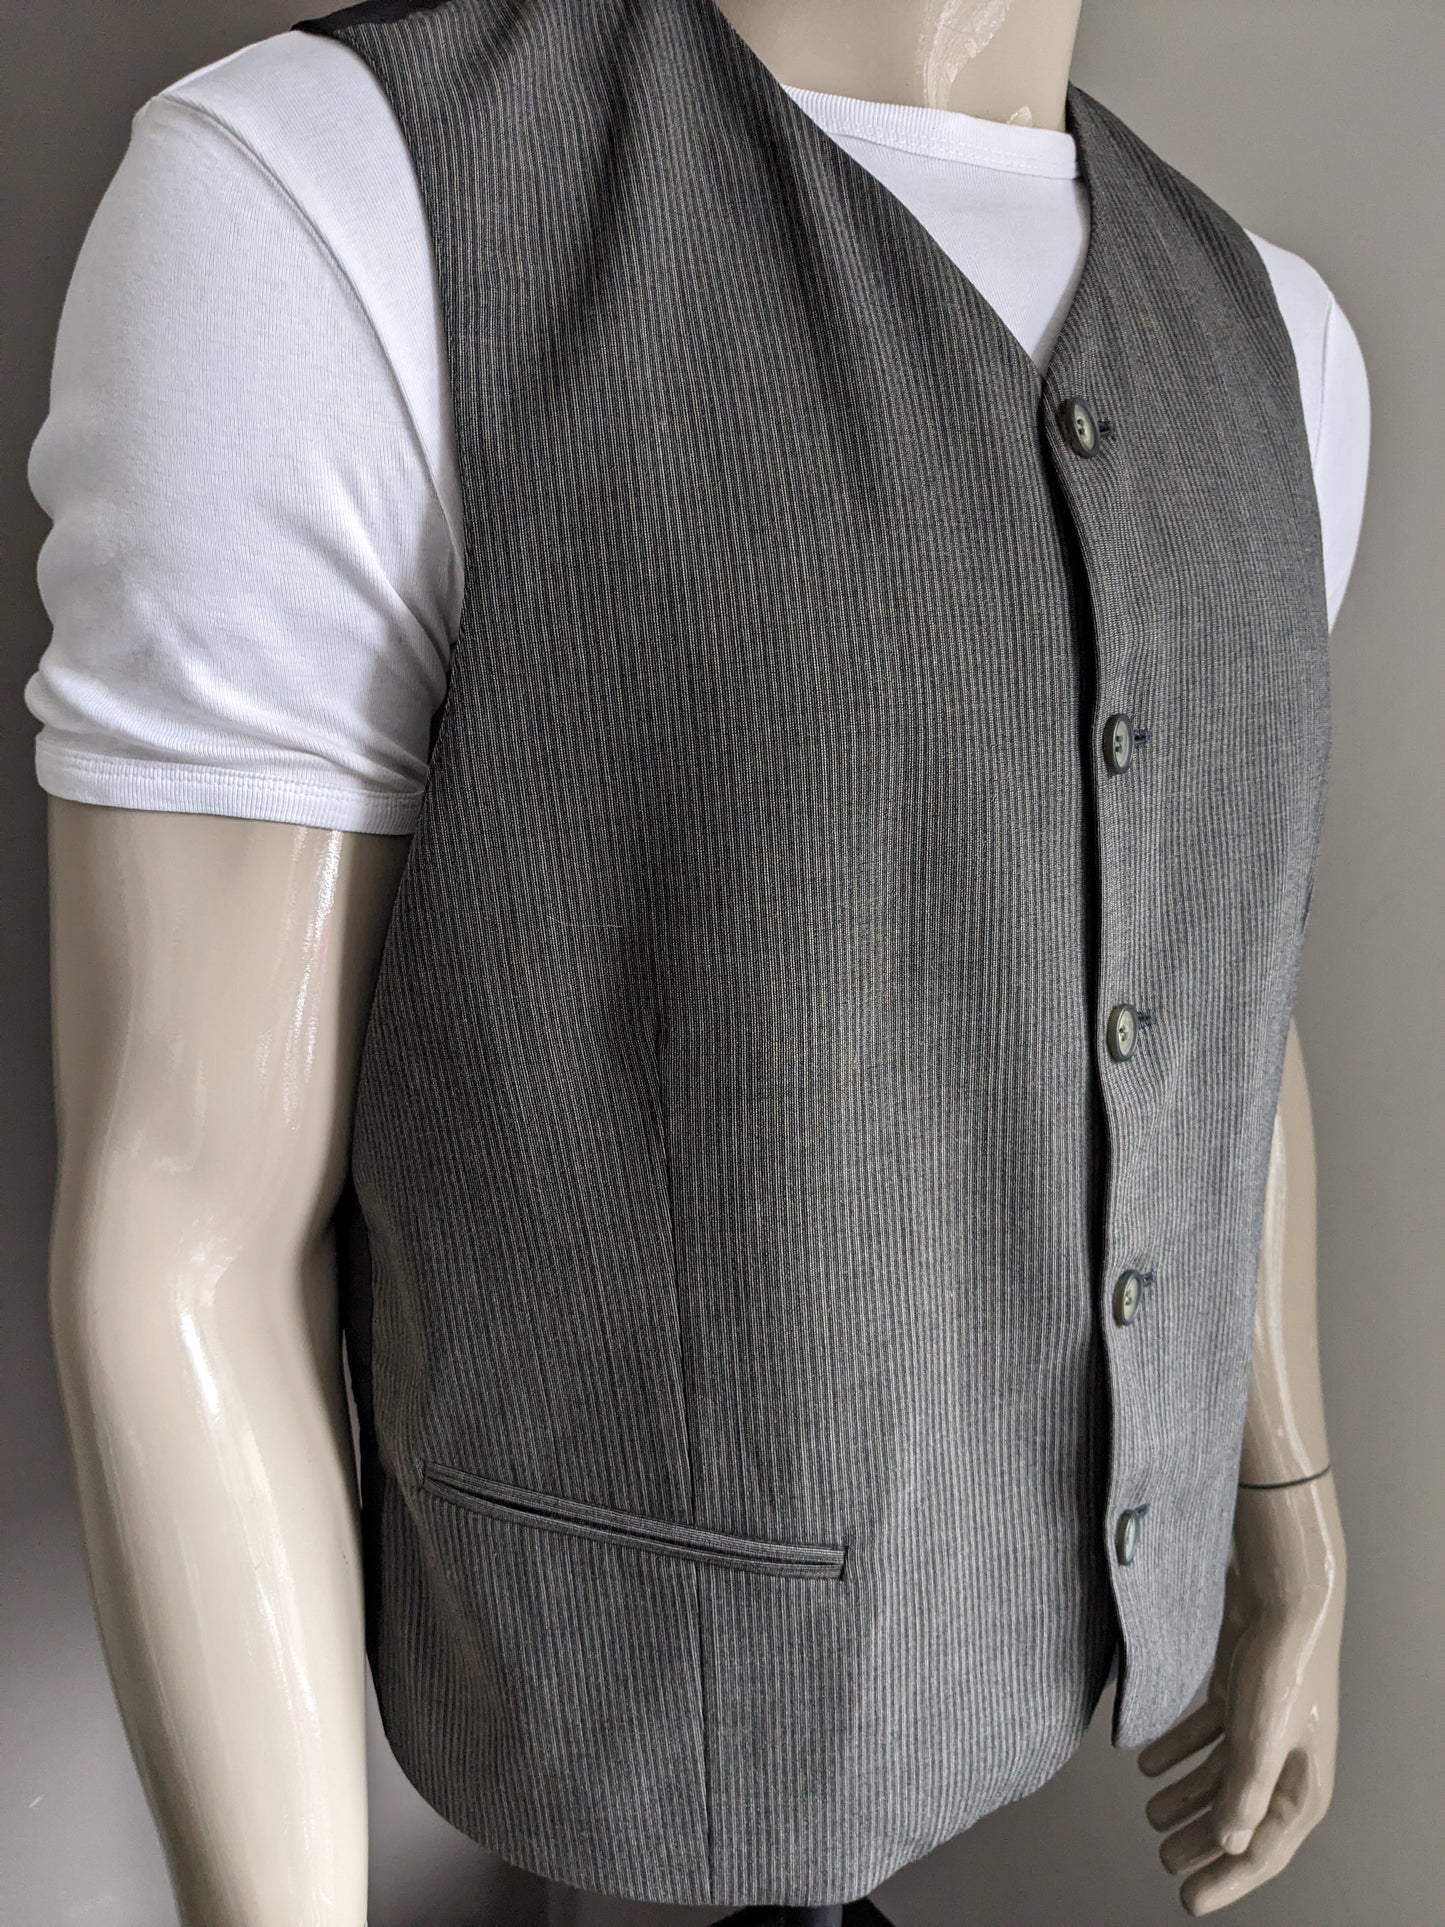 Vintage waistcoat. Gray striped motif. Size L. #318.